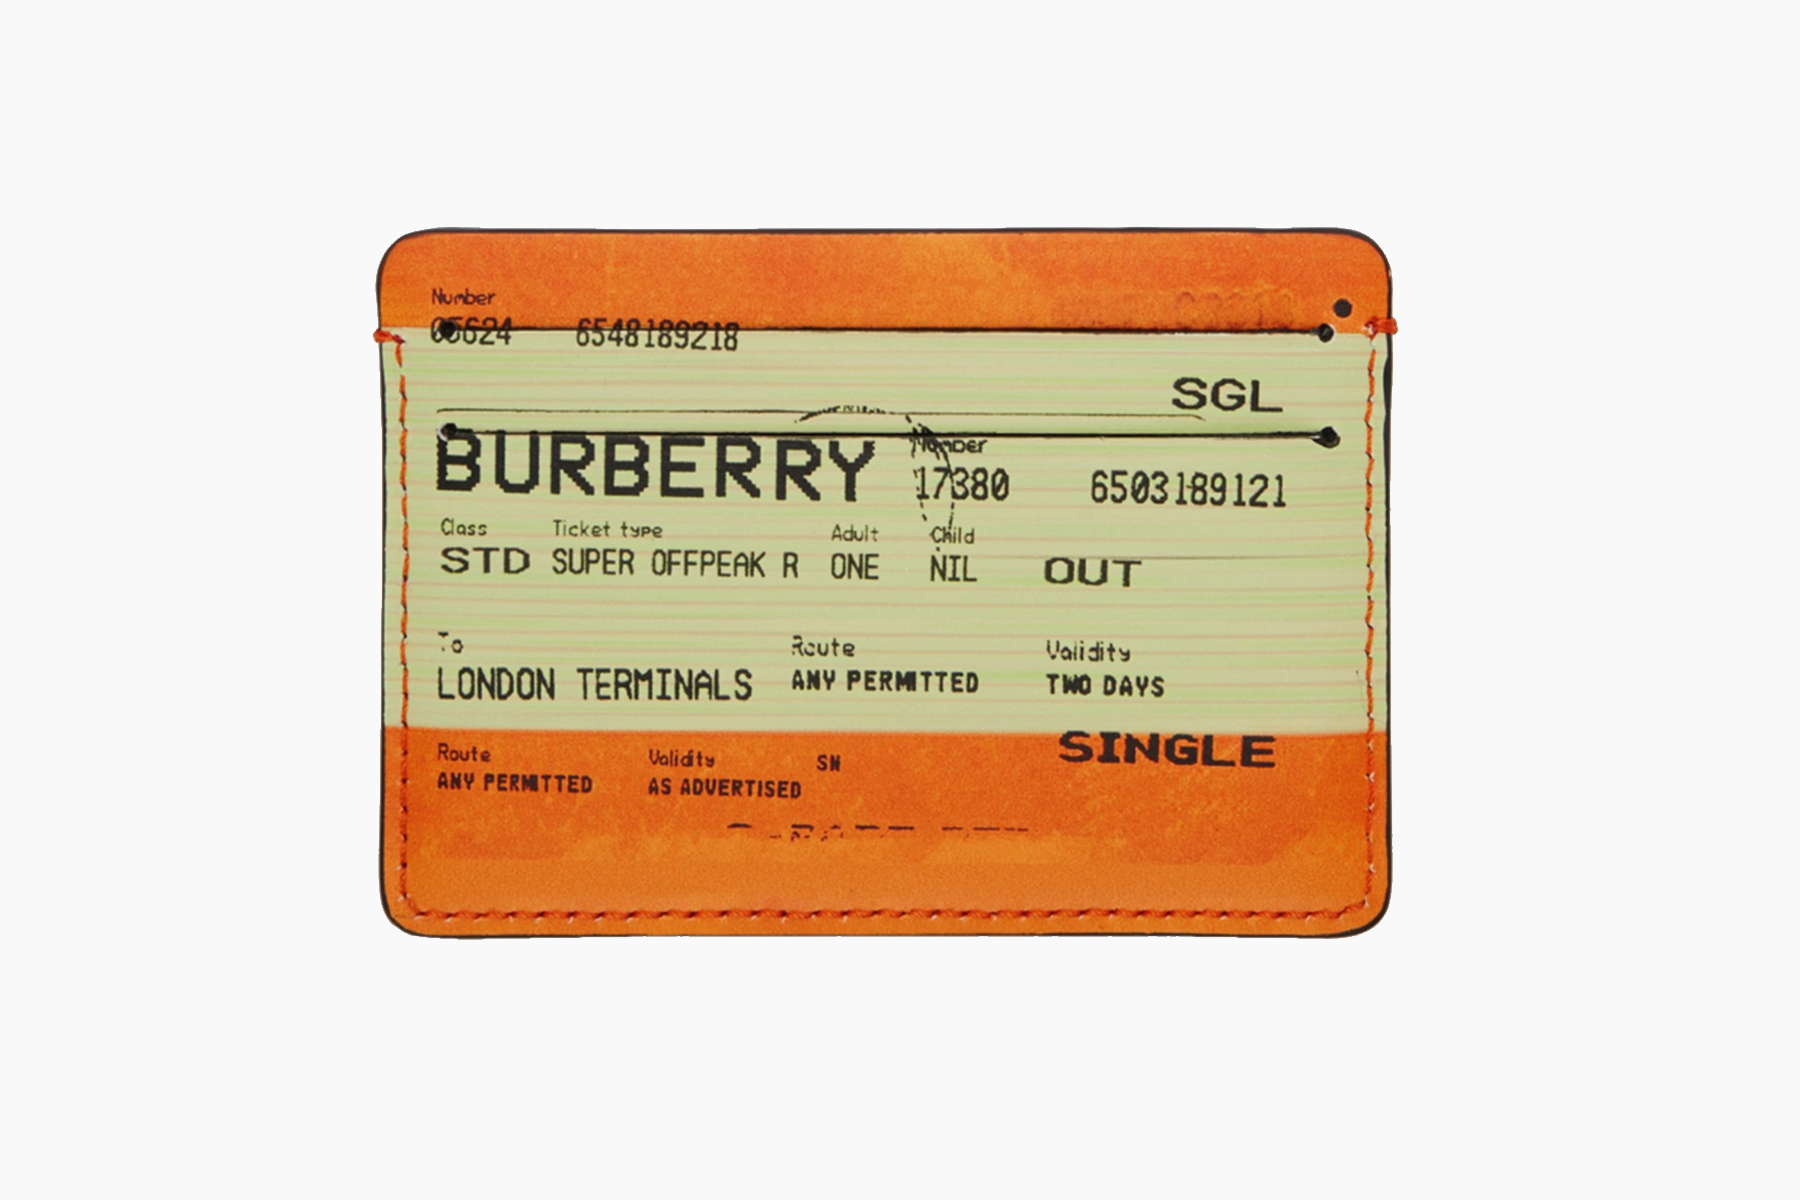 burberry credit card holder